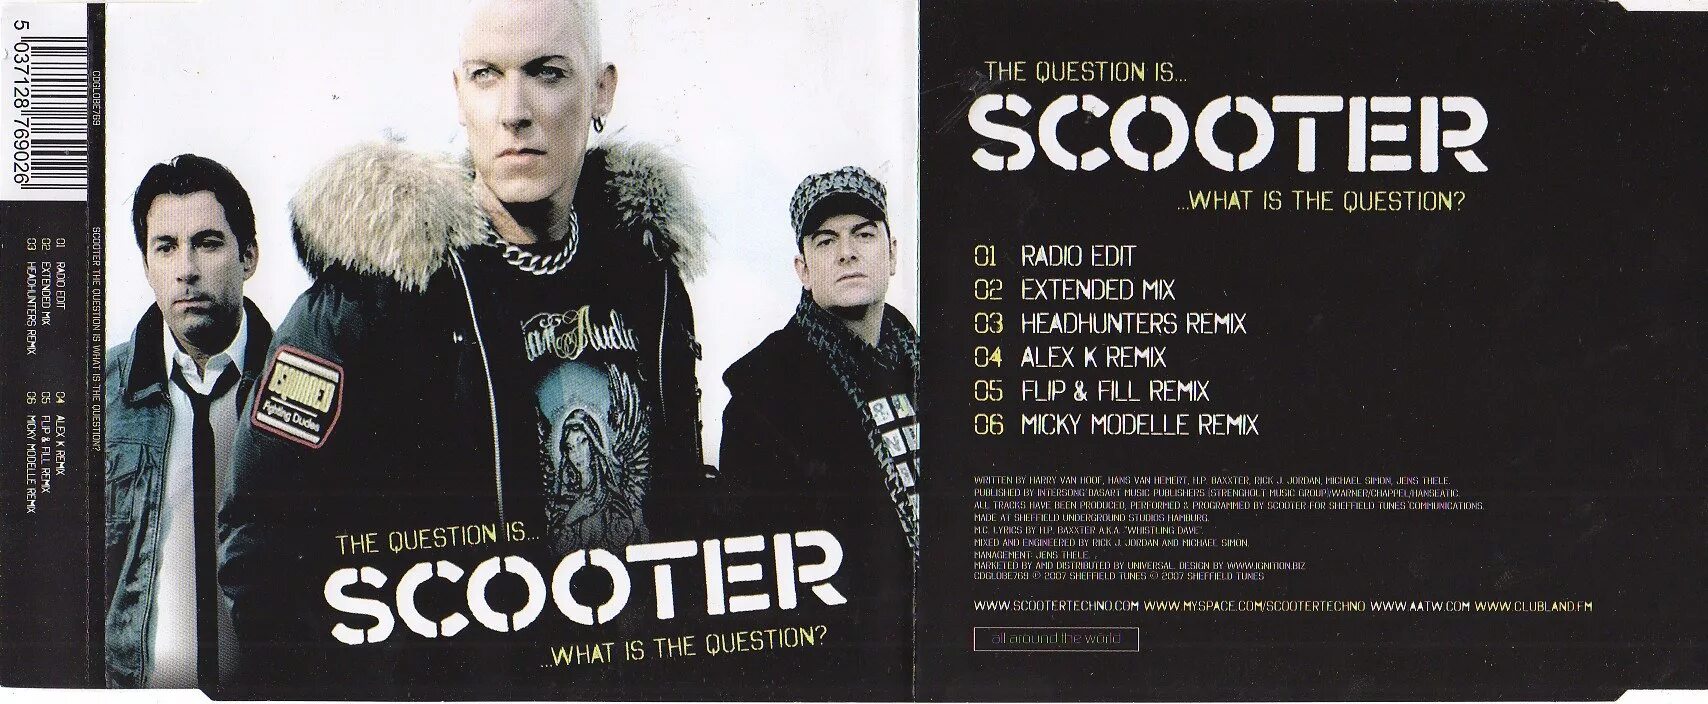 Scooter i keep hearing. Scooter обложка. Scooter обложки альбомов. Scooter группа 1995. Скутер альбомы.